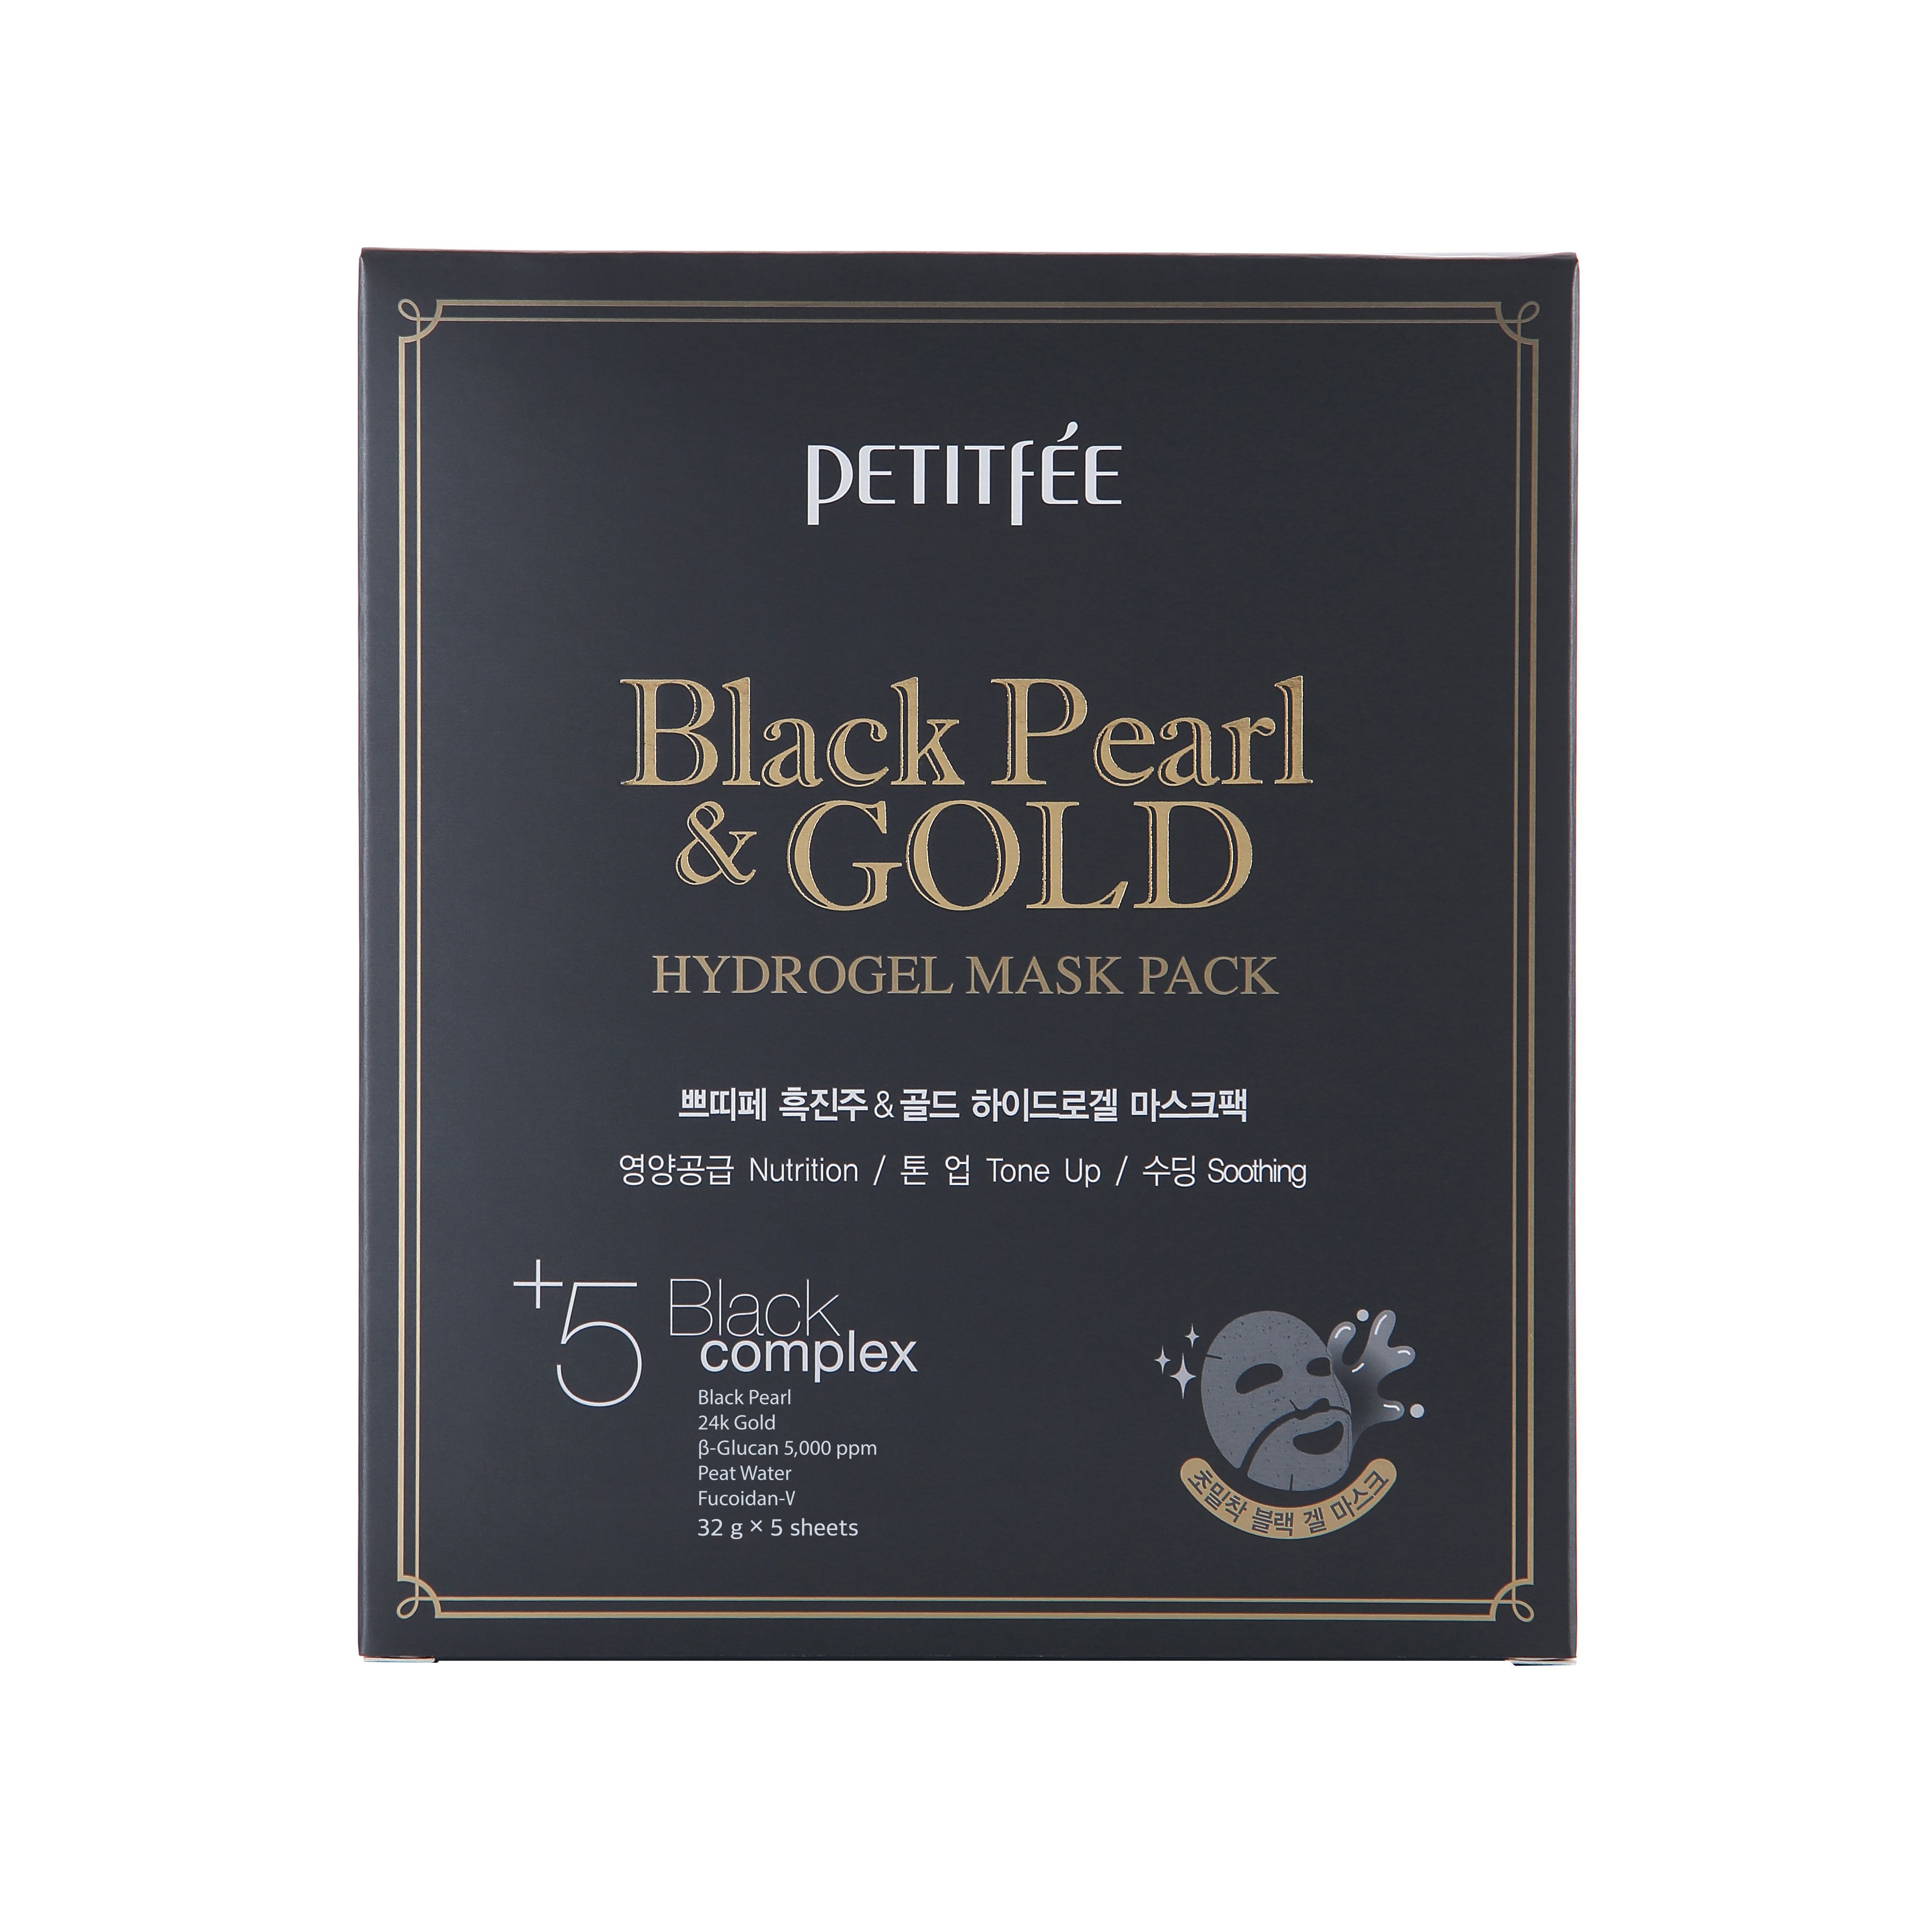 Petitfee  Koelf Black Pearl  Gold Hydrogel Mask Pack 32 g * 5 sheets